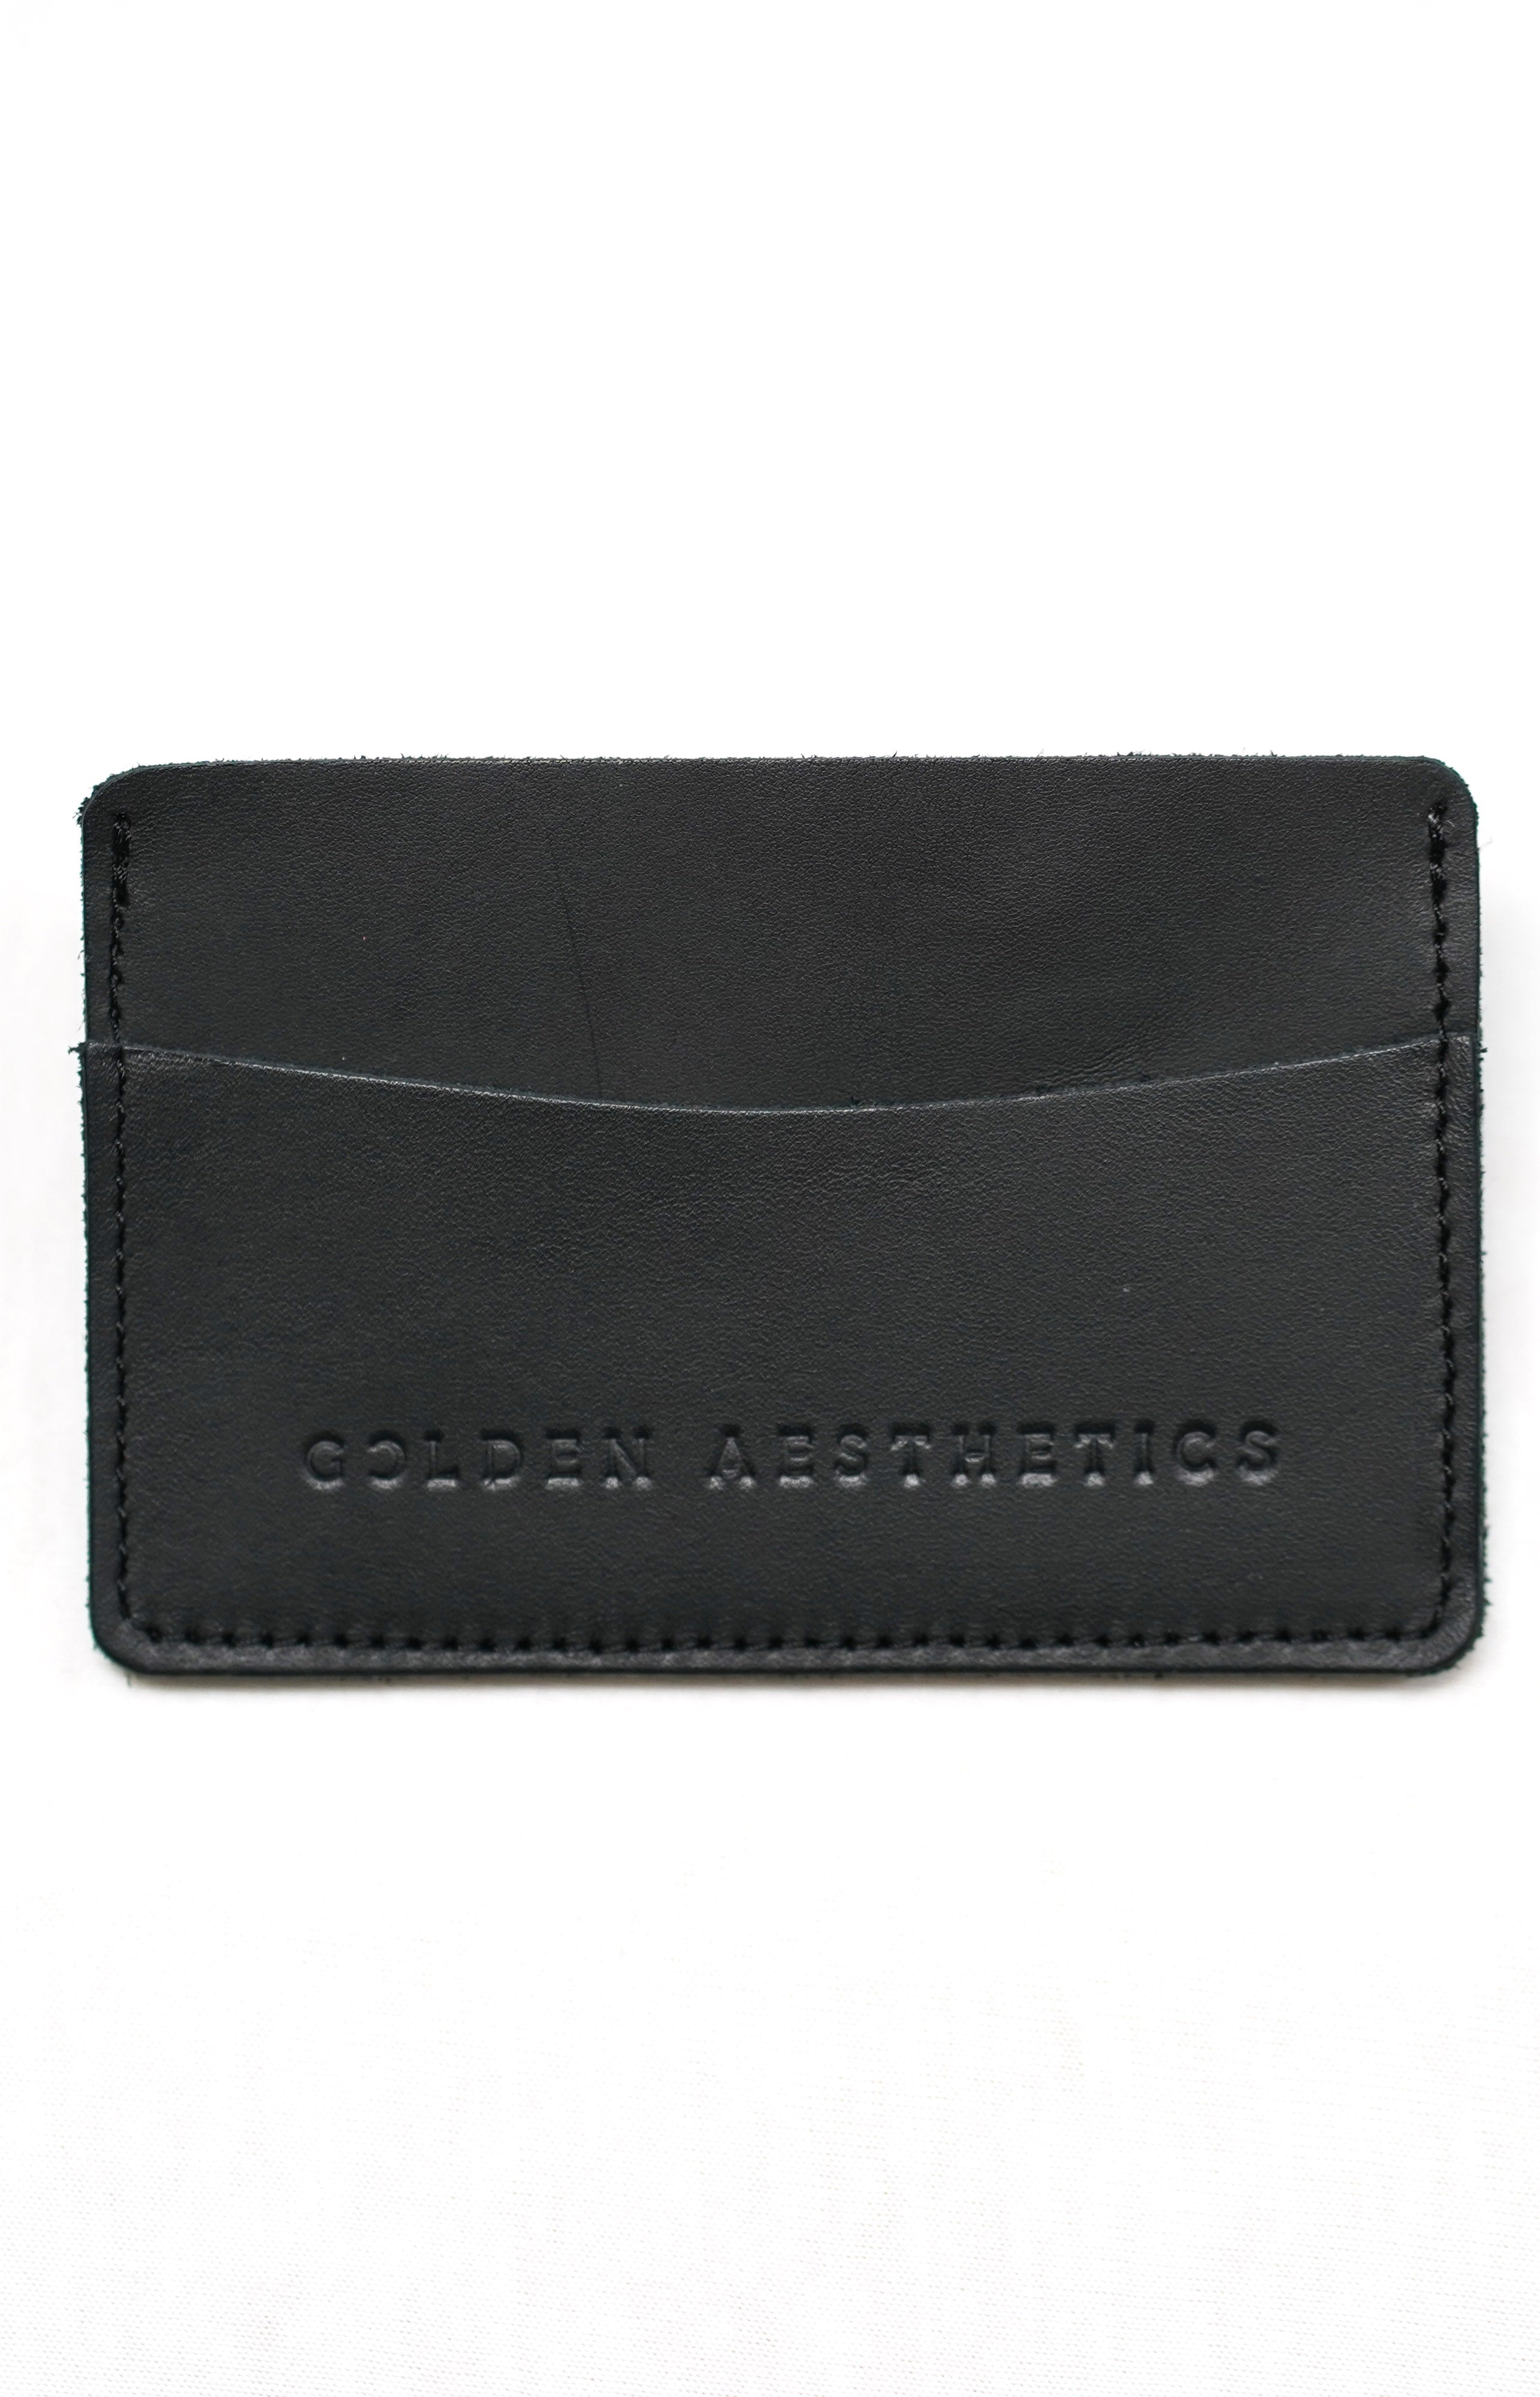 Classic Black Card Holder Wallet